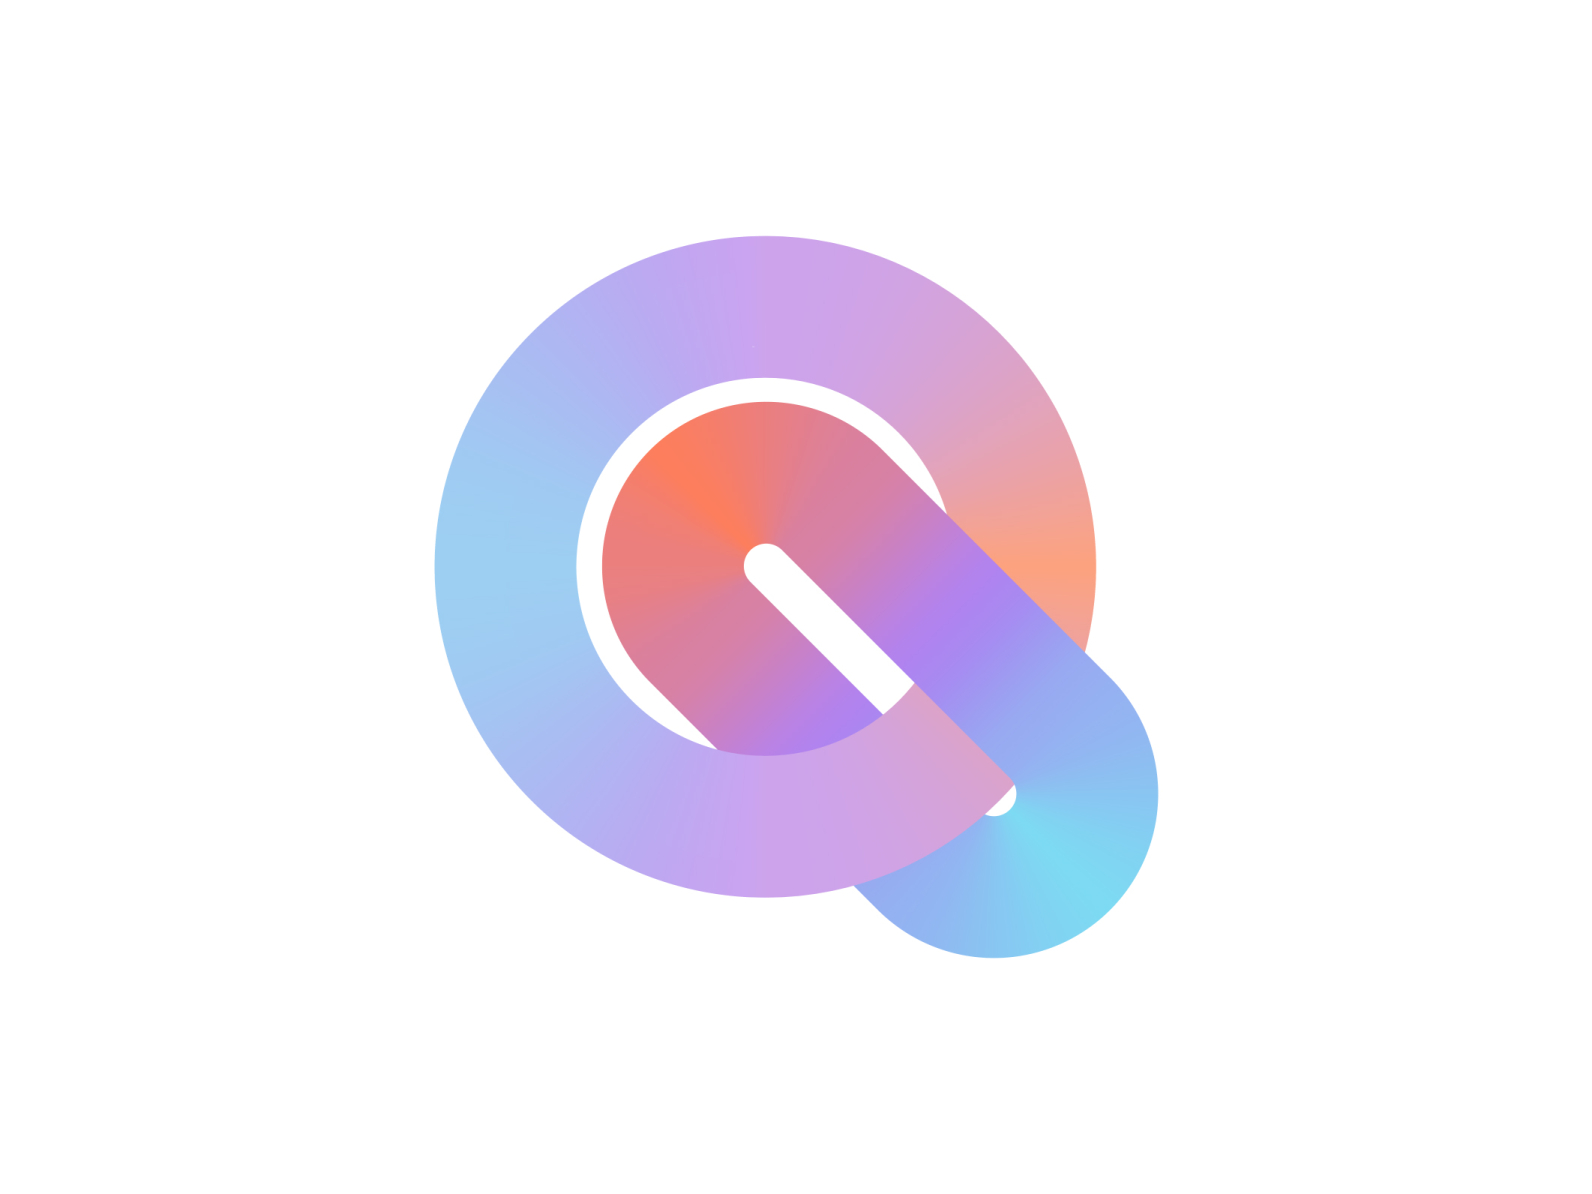 Unused letter Q logo design by Logotogo on Dribbble